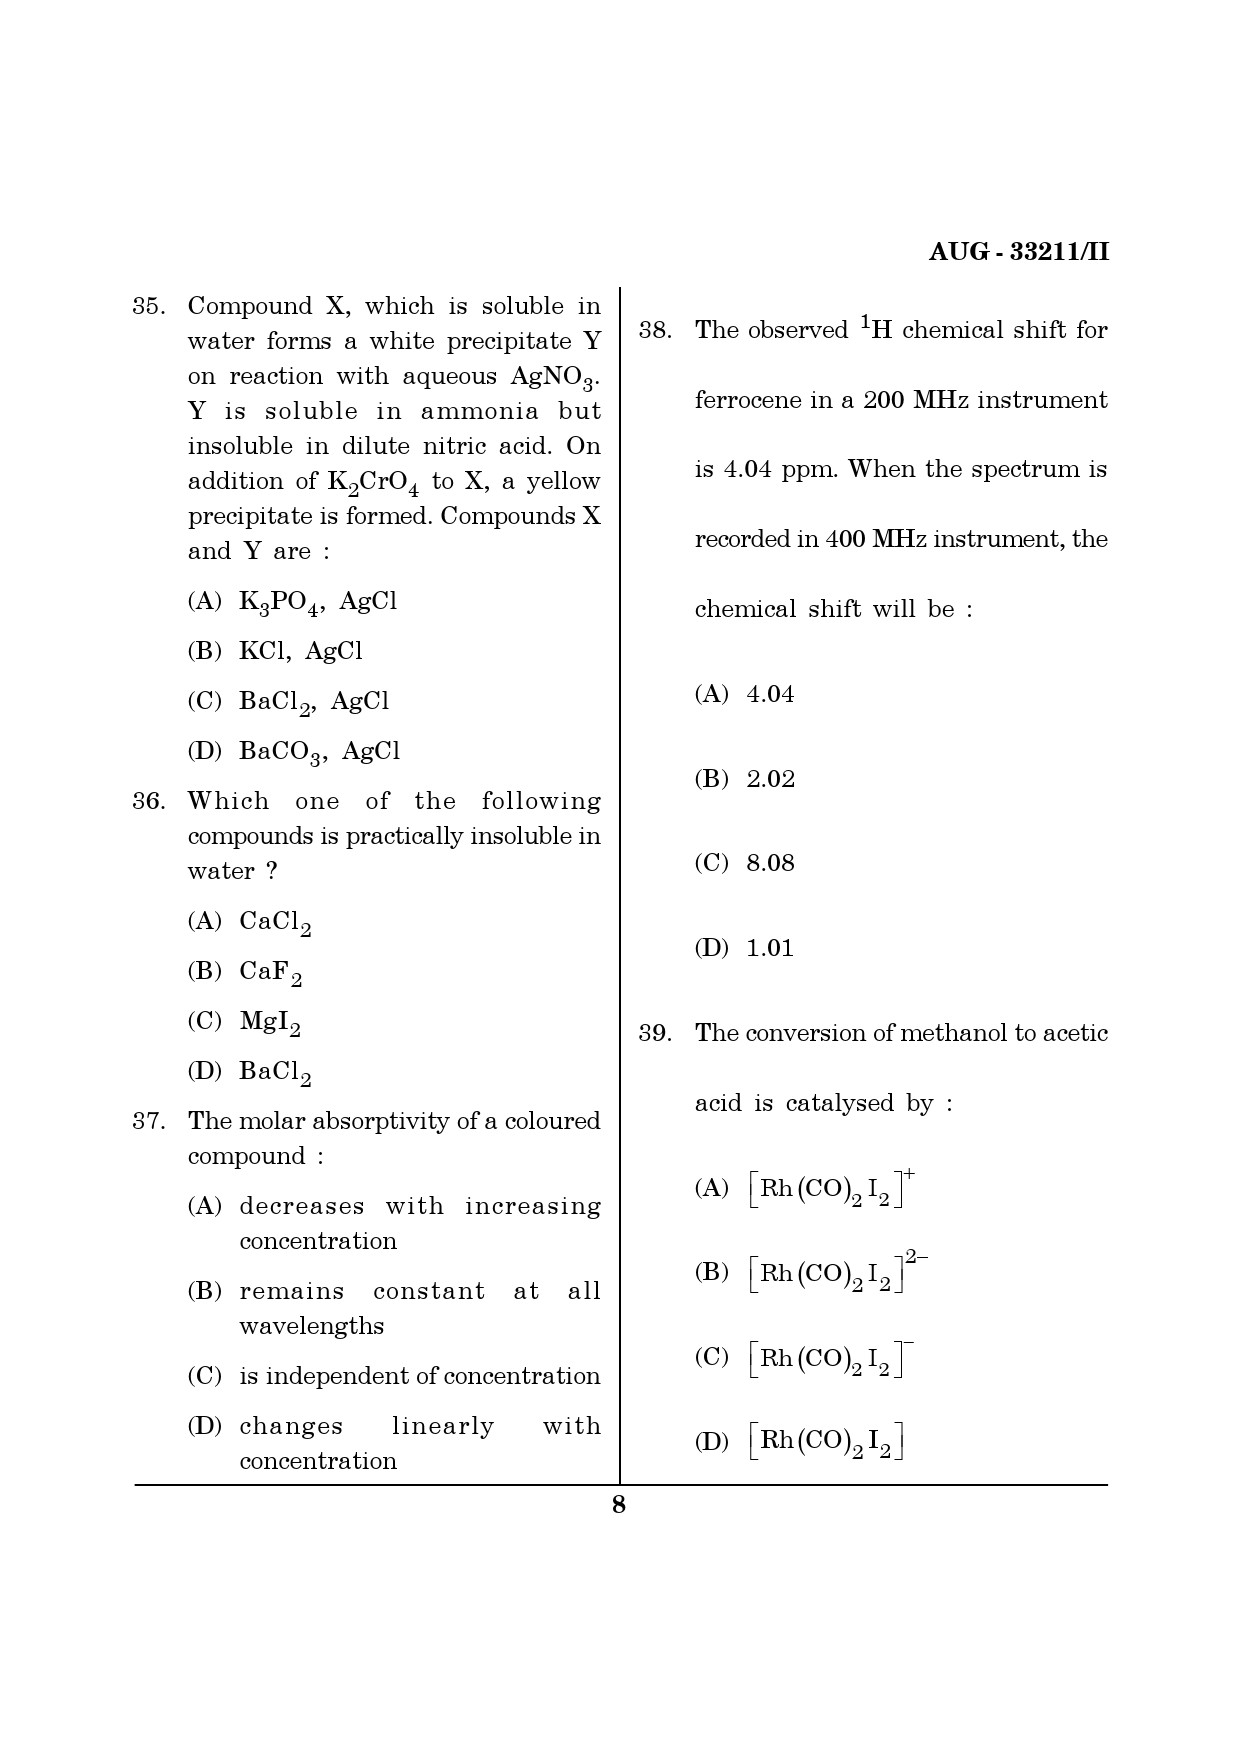 Maharashtra SET Chemical Sciences Question Paper II August 2011 8